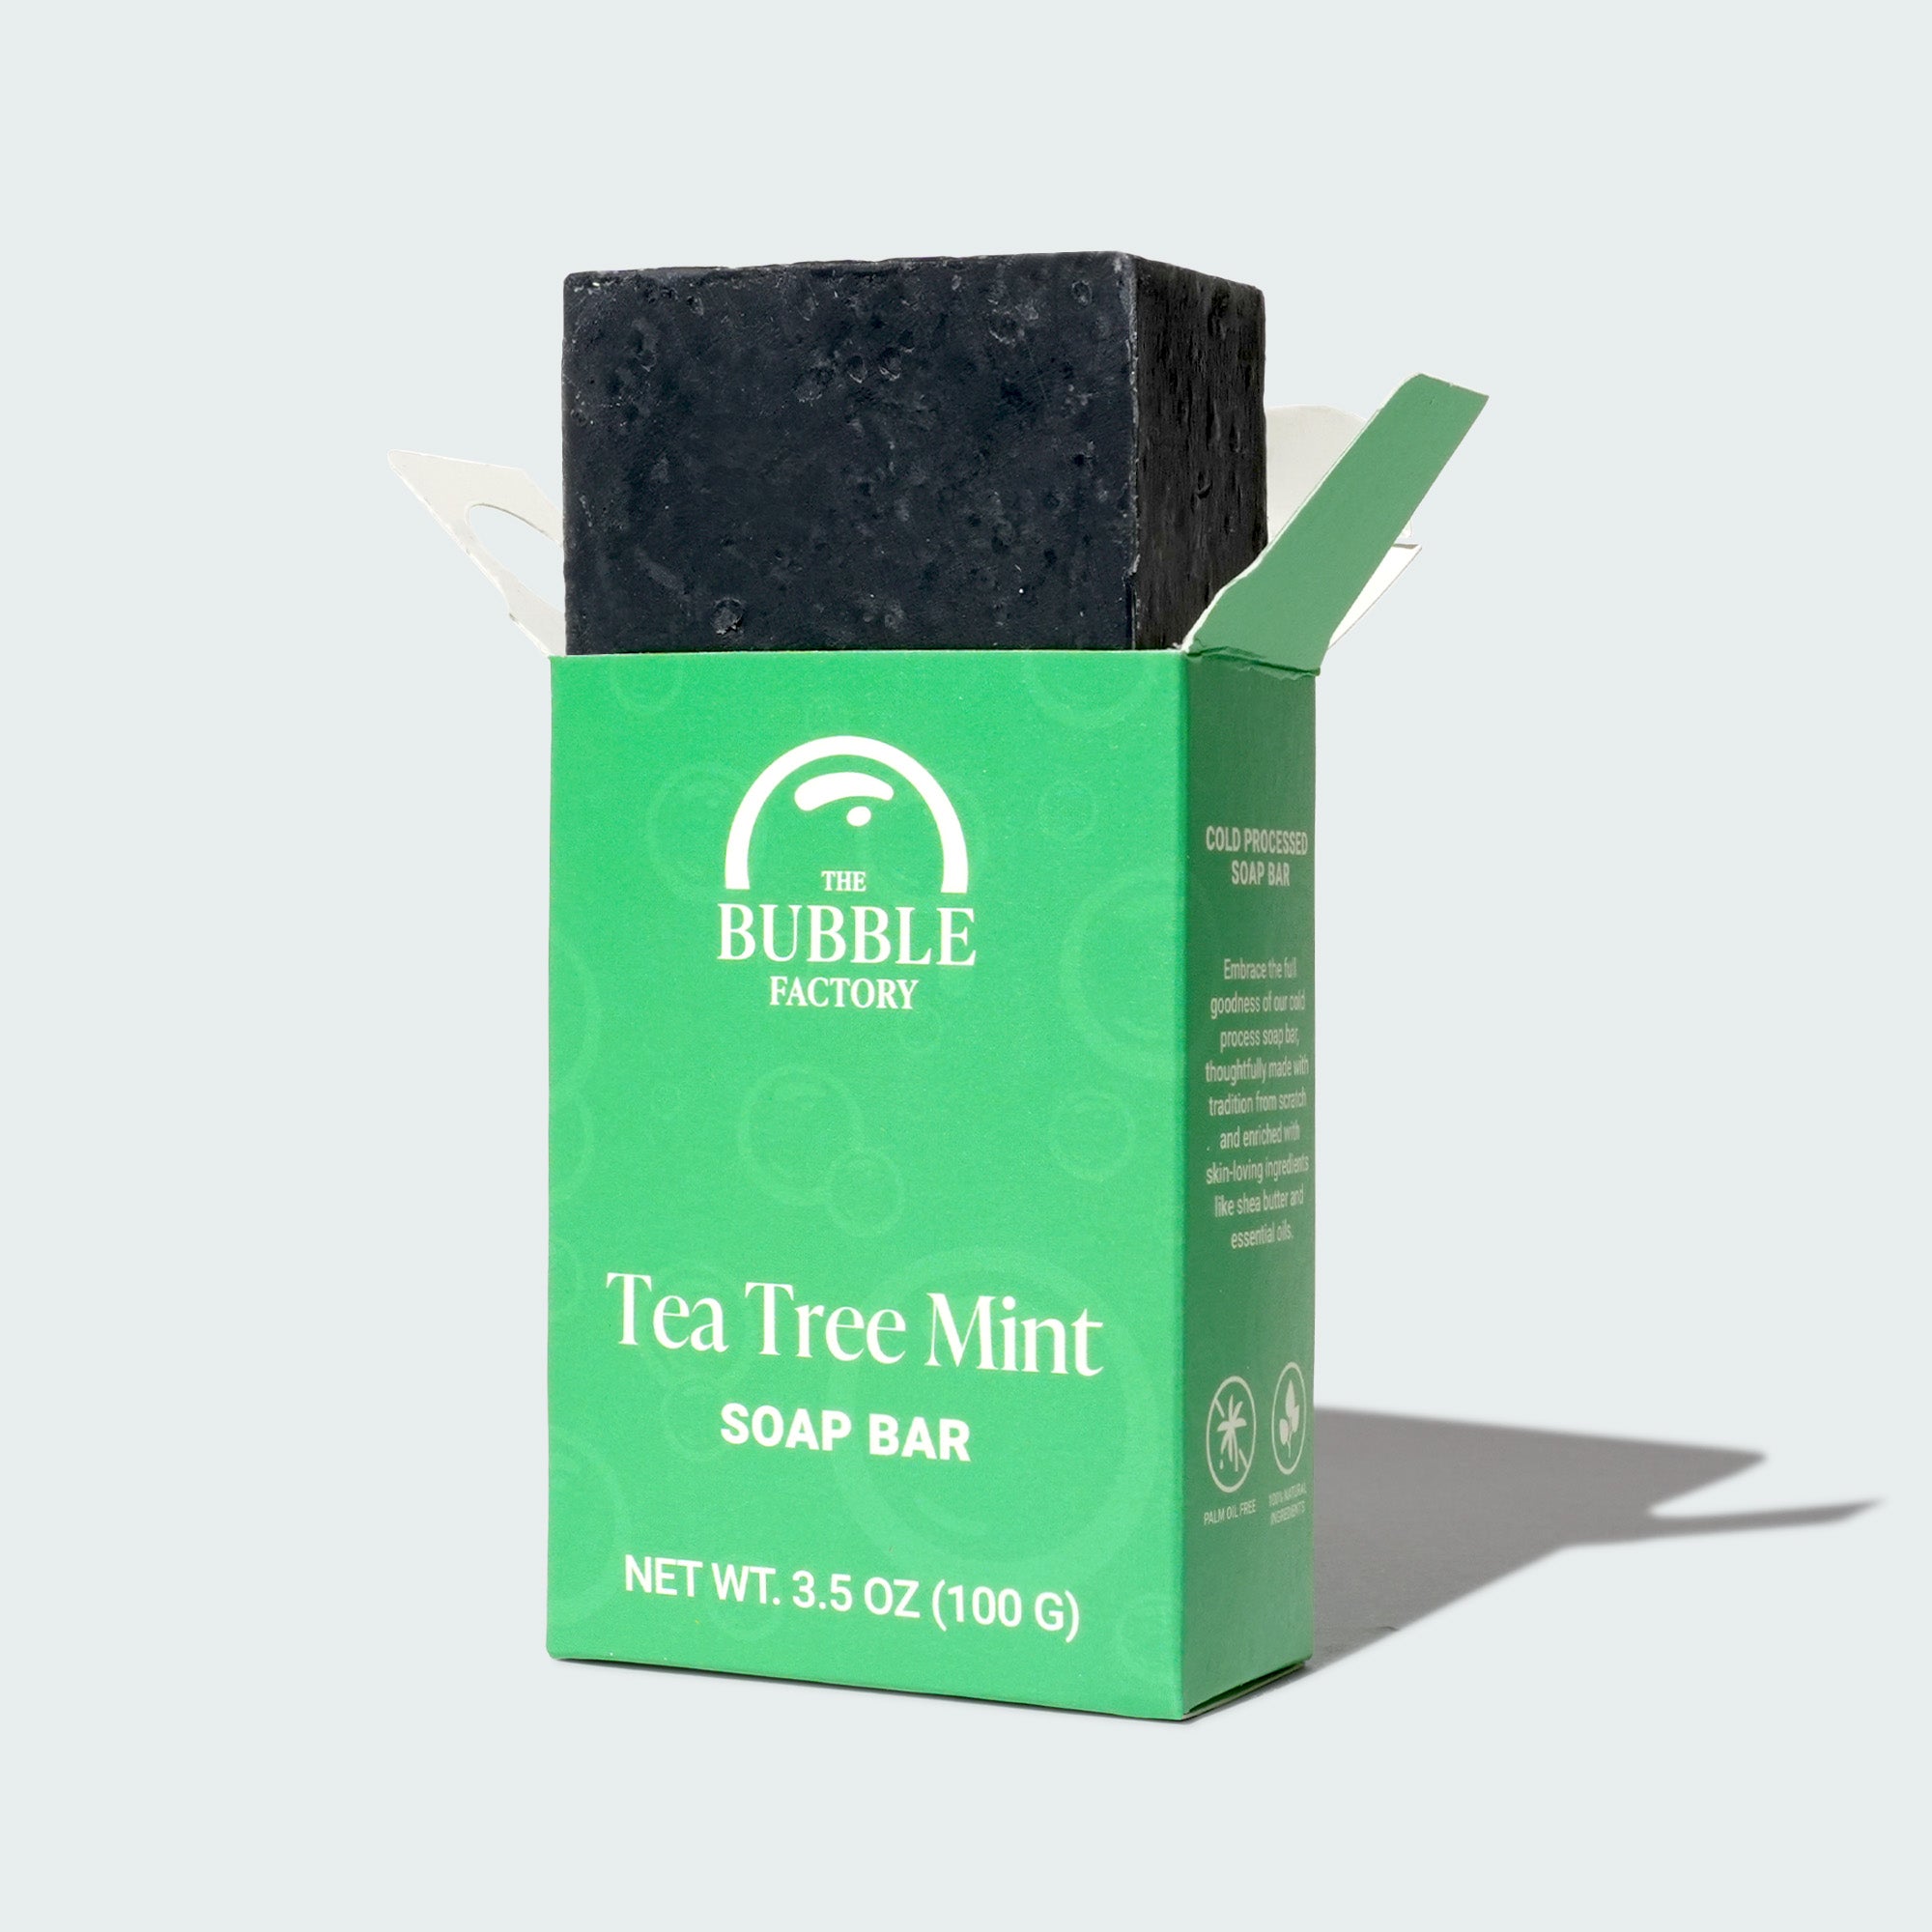 Tea Tree Mint Natural Essential Oil Soap Bar, Single Box 3D View